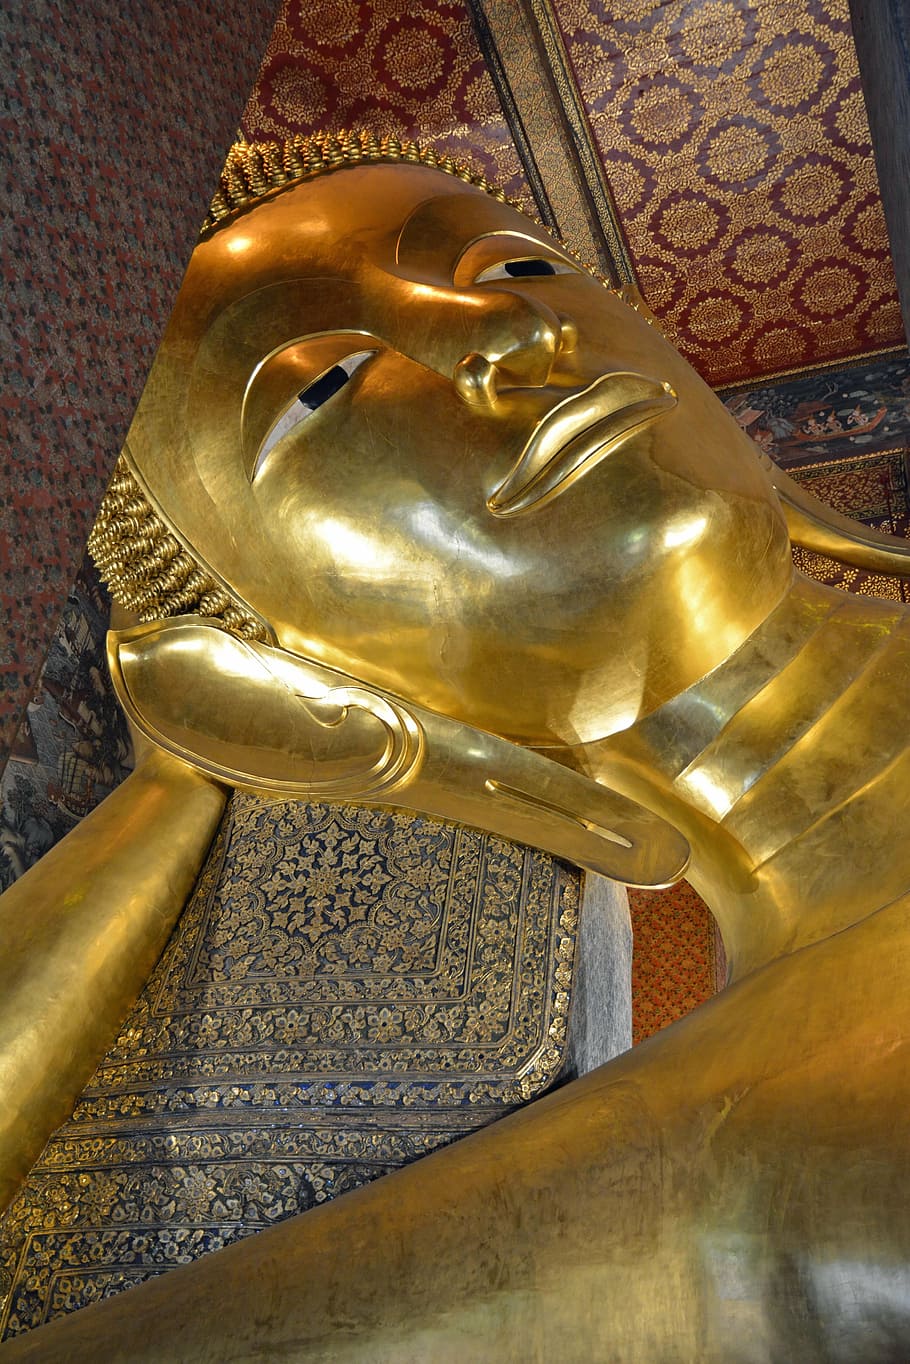 thailand, bangkok, reclining buddha, sculpture, statue, male likeness, belief, gold colored, representation, religion